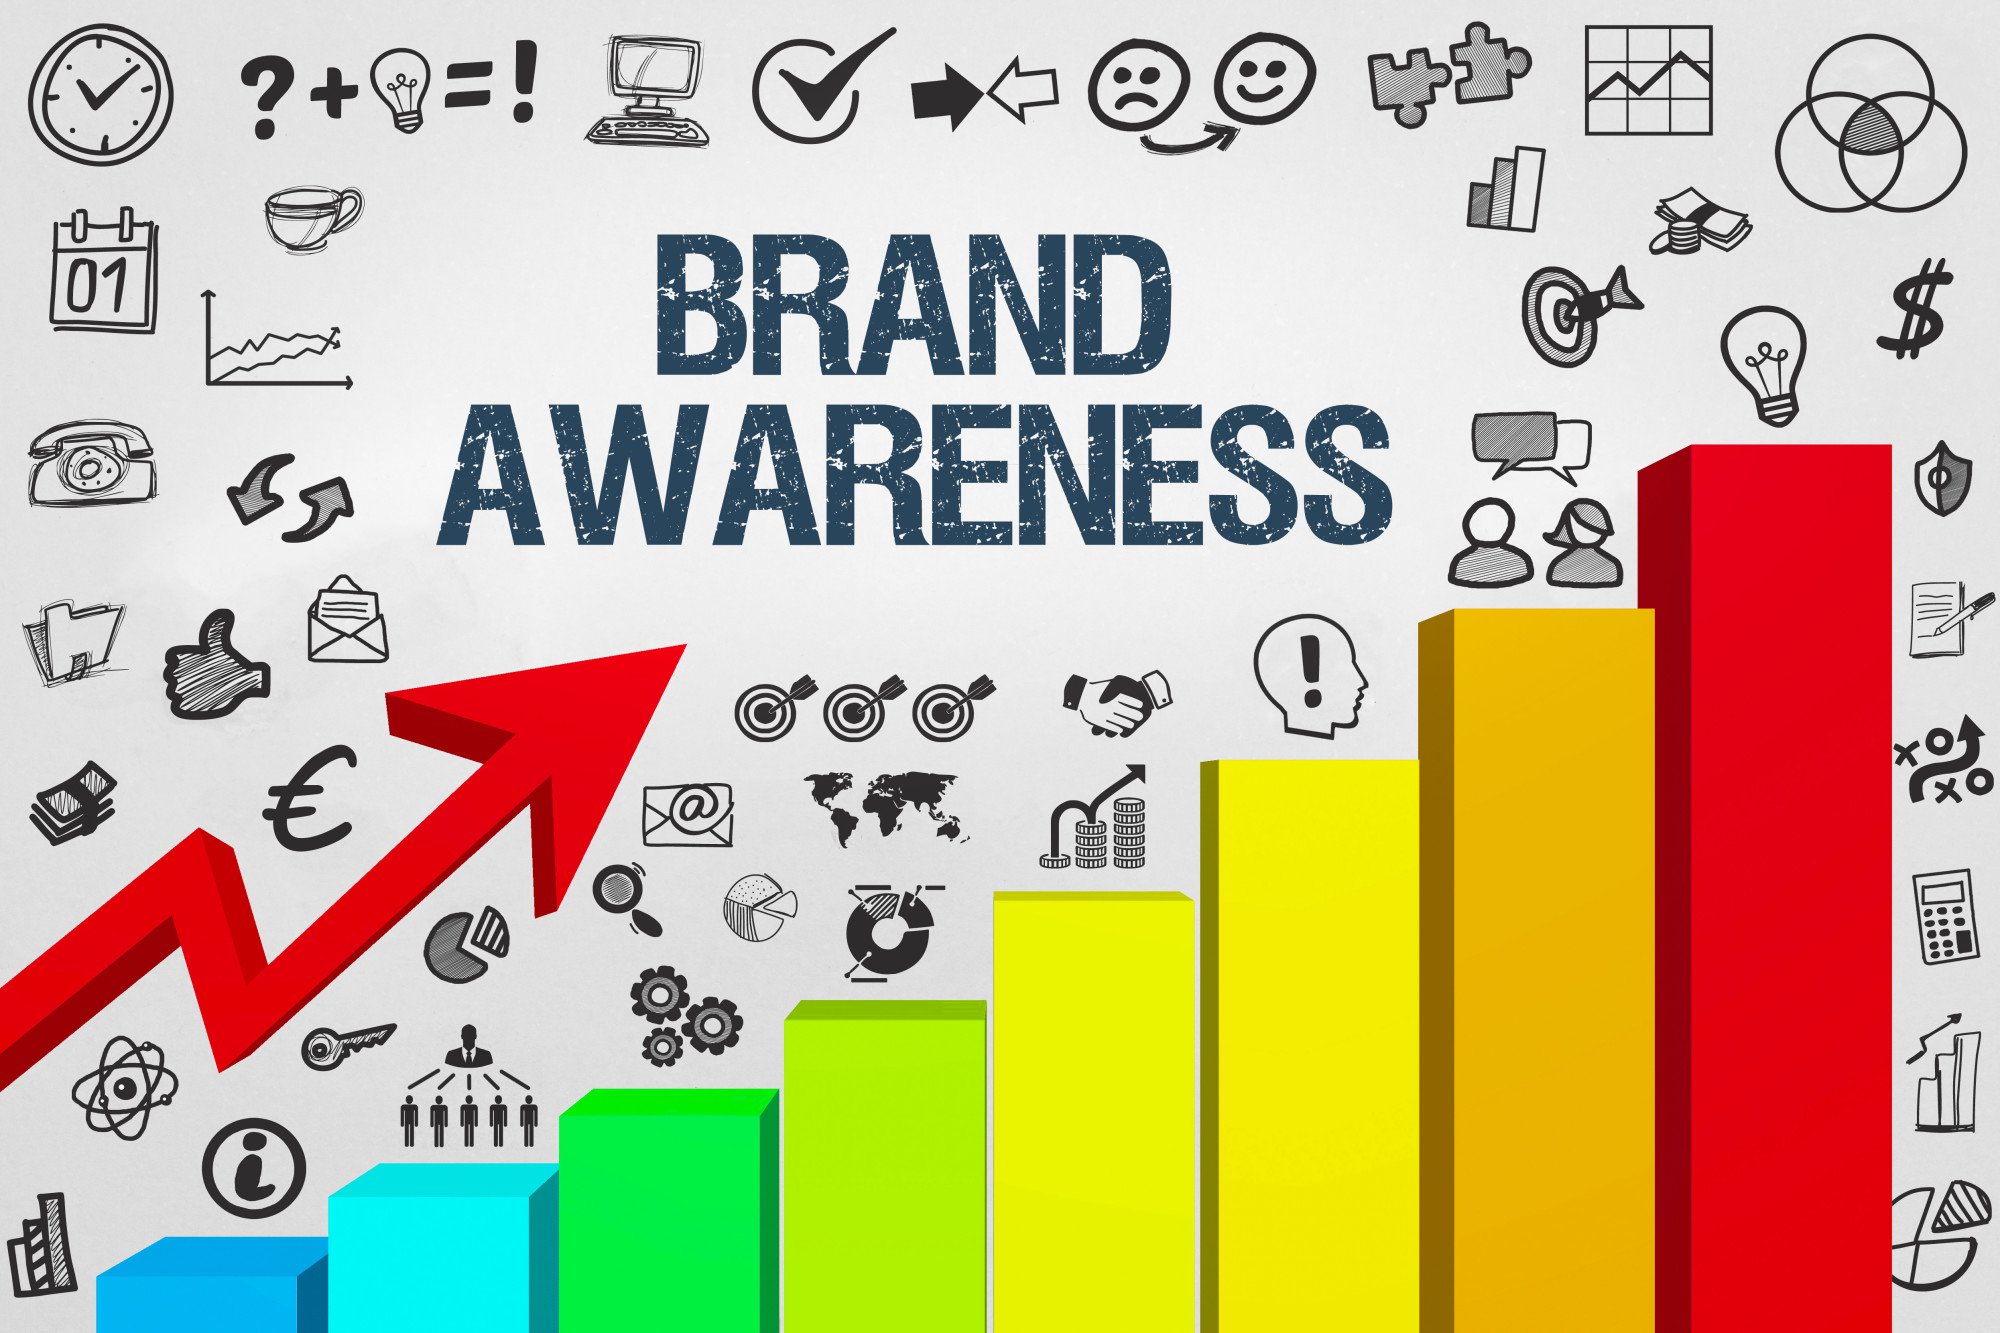 Create brand awareness